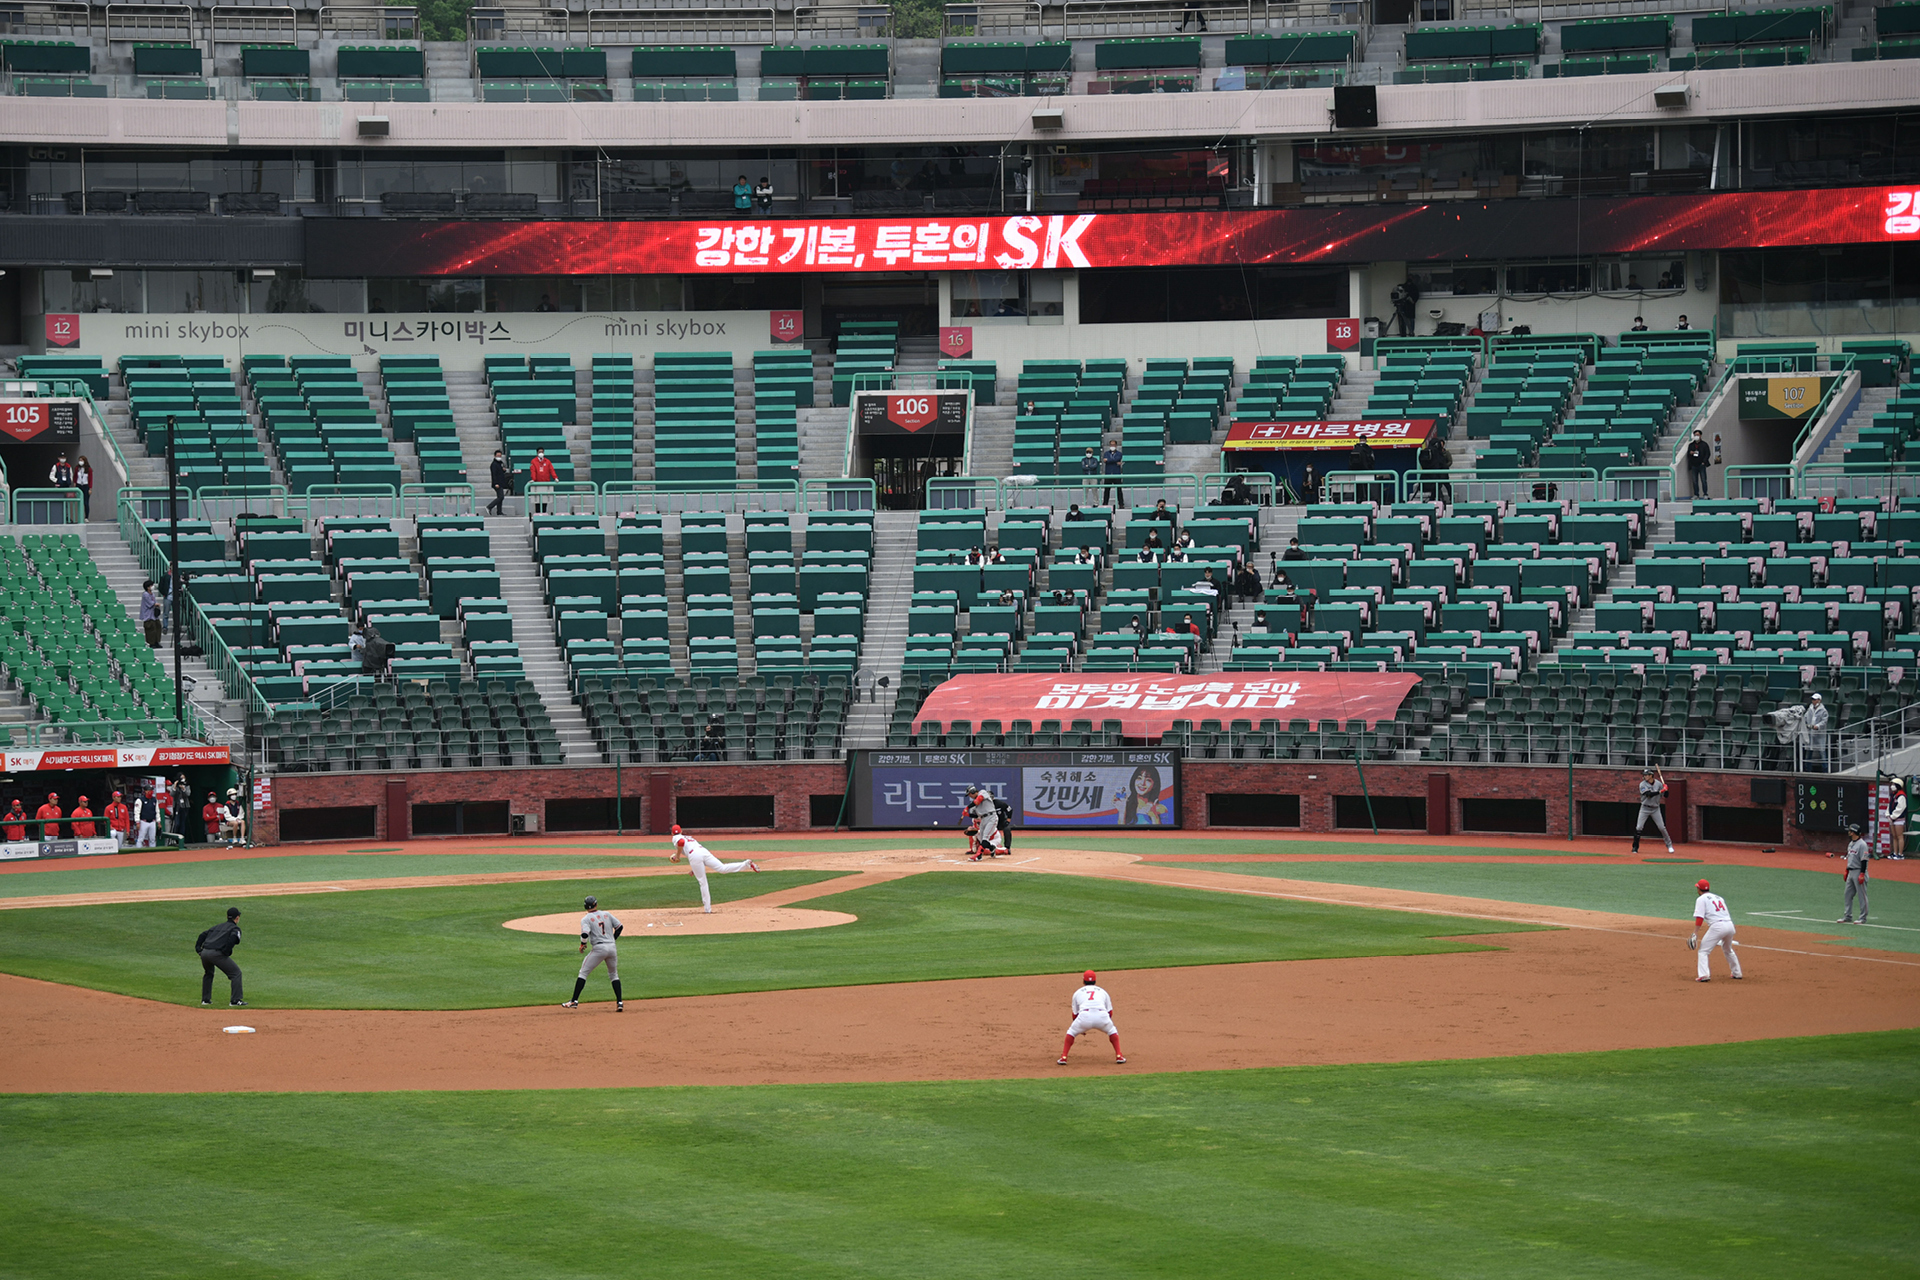 Korean baseball season begins in empty stadiums